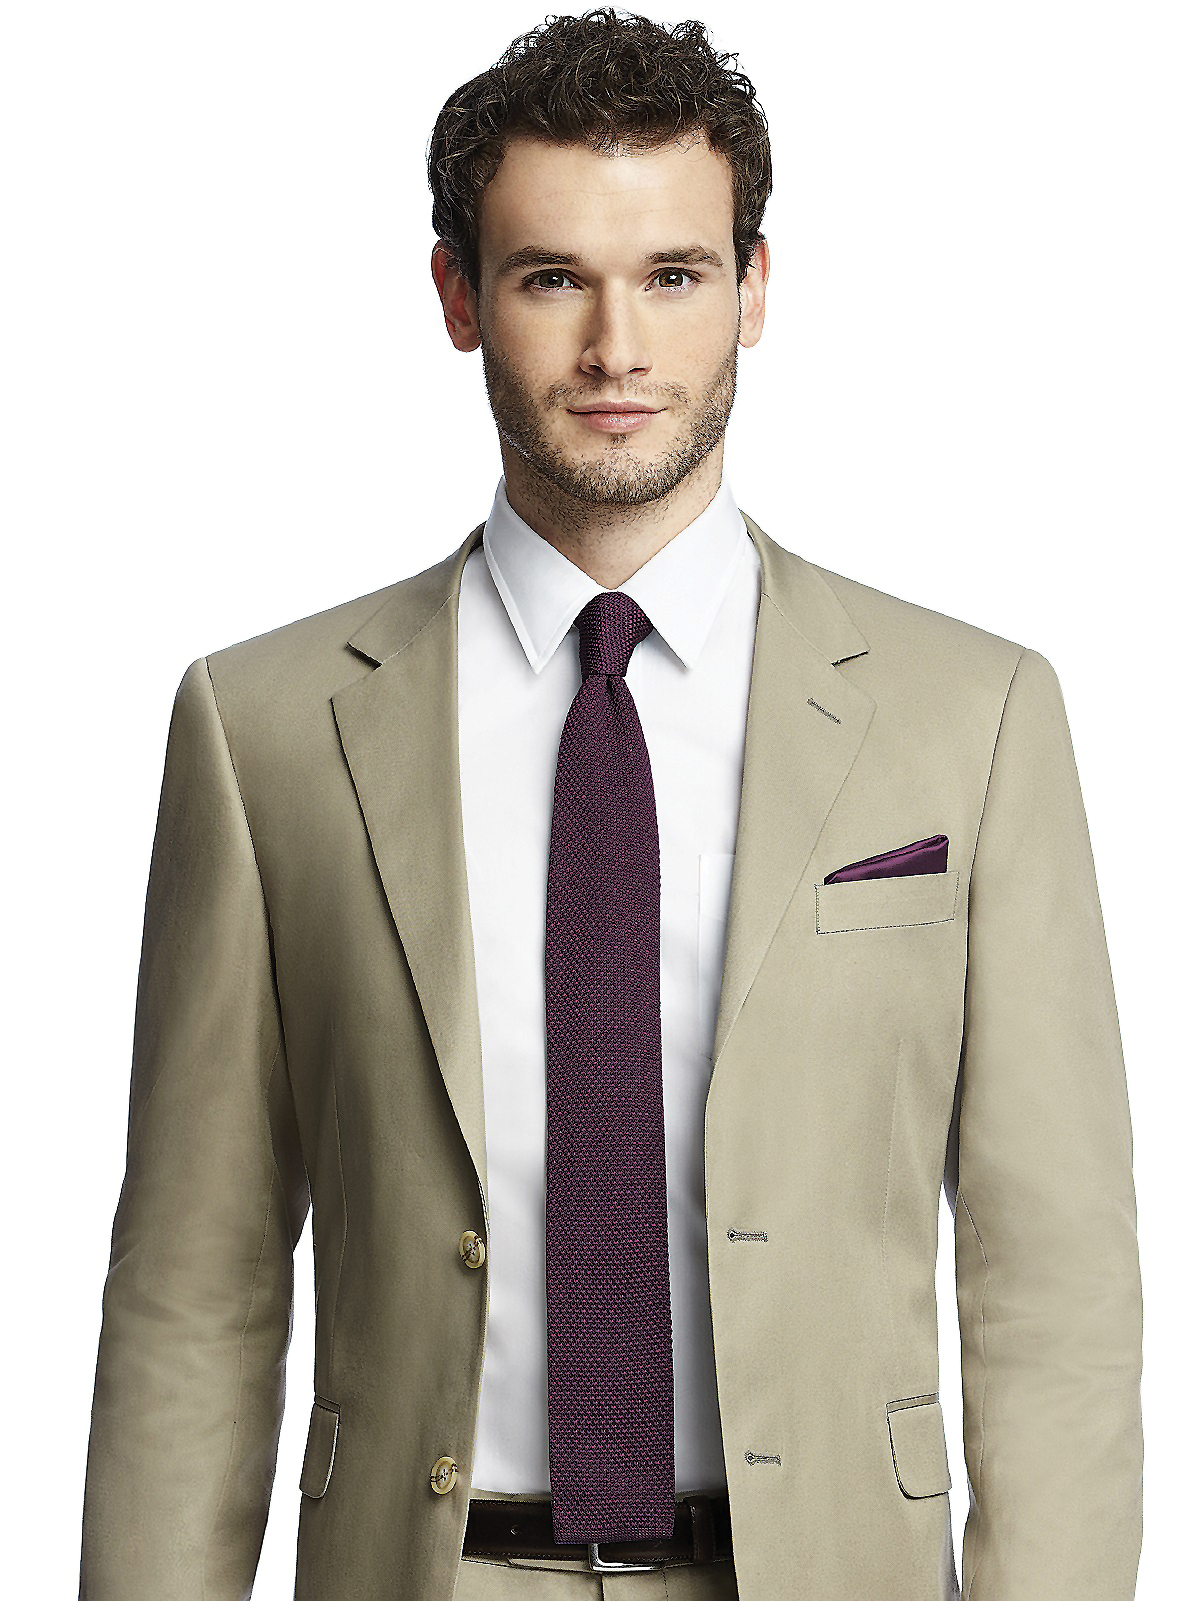 Modern-Mens-Fashion-Suit-Spring-2015-Style - Gentlemen's Guide OC